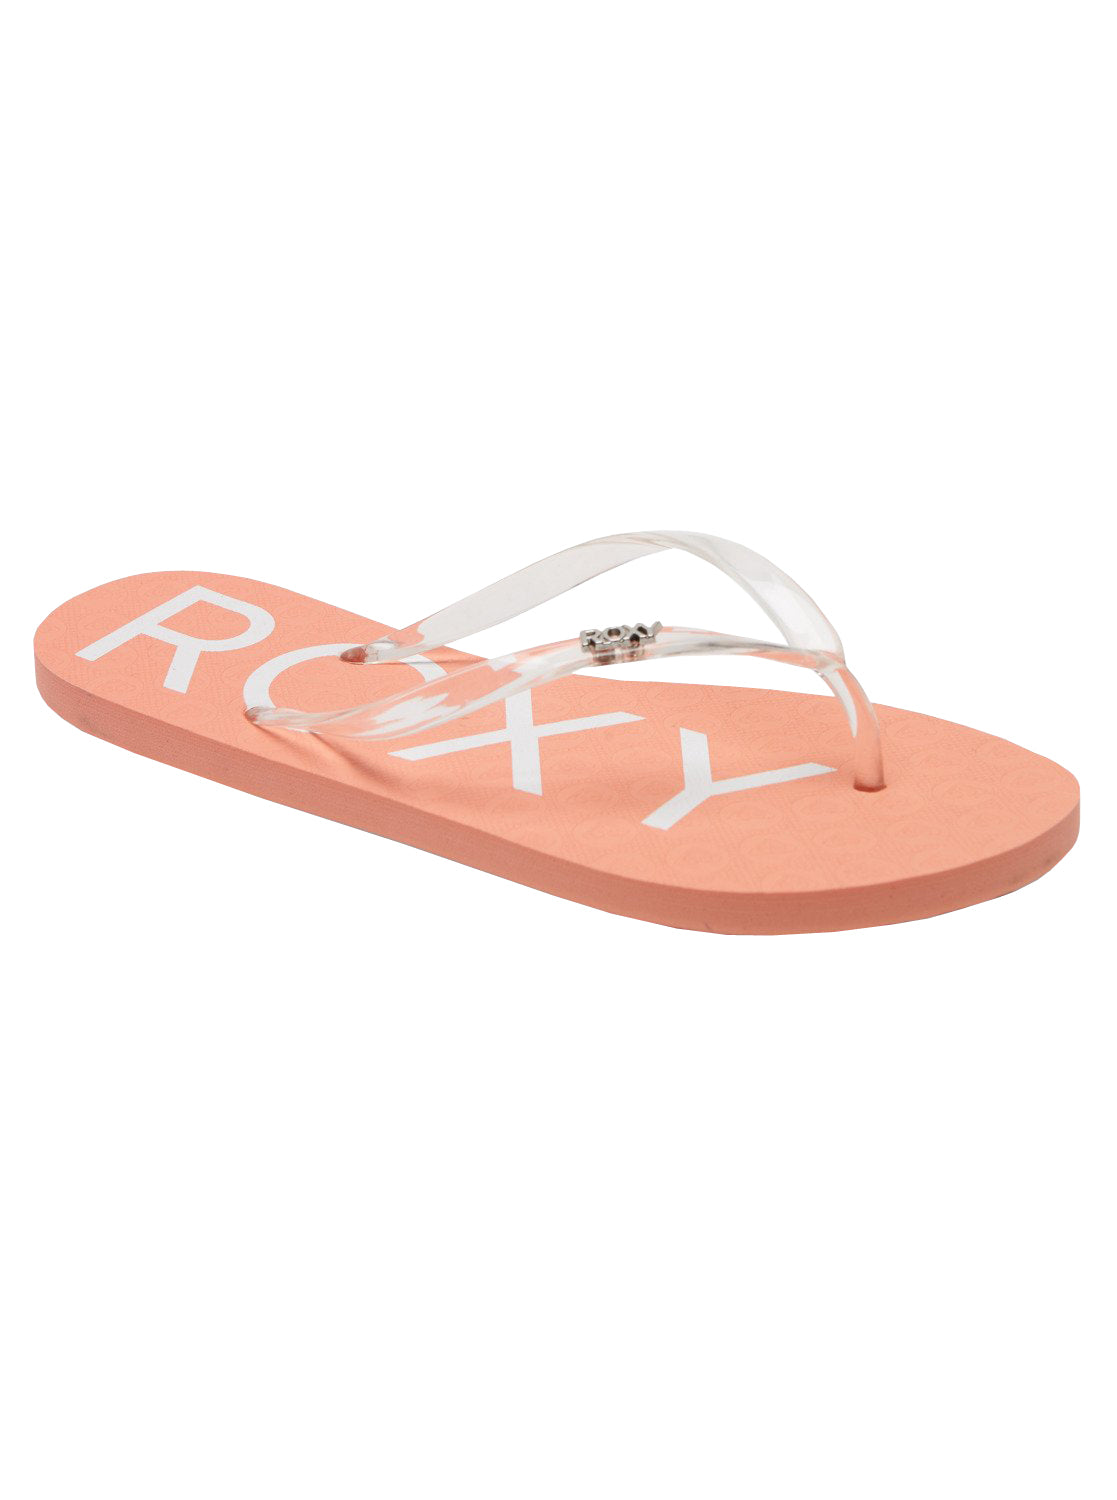 Roxy Viva Jelly Womens Sandal HCO-Hot Coral 10